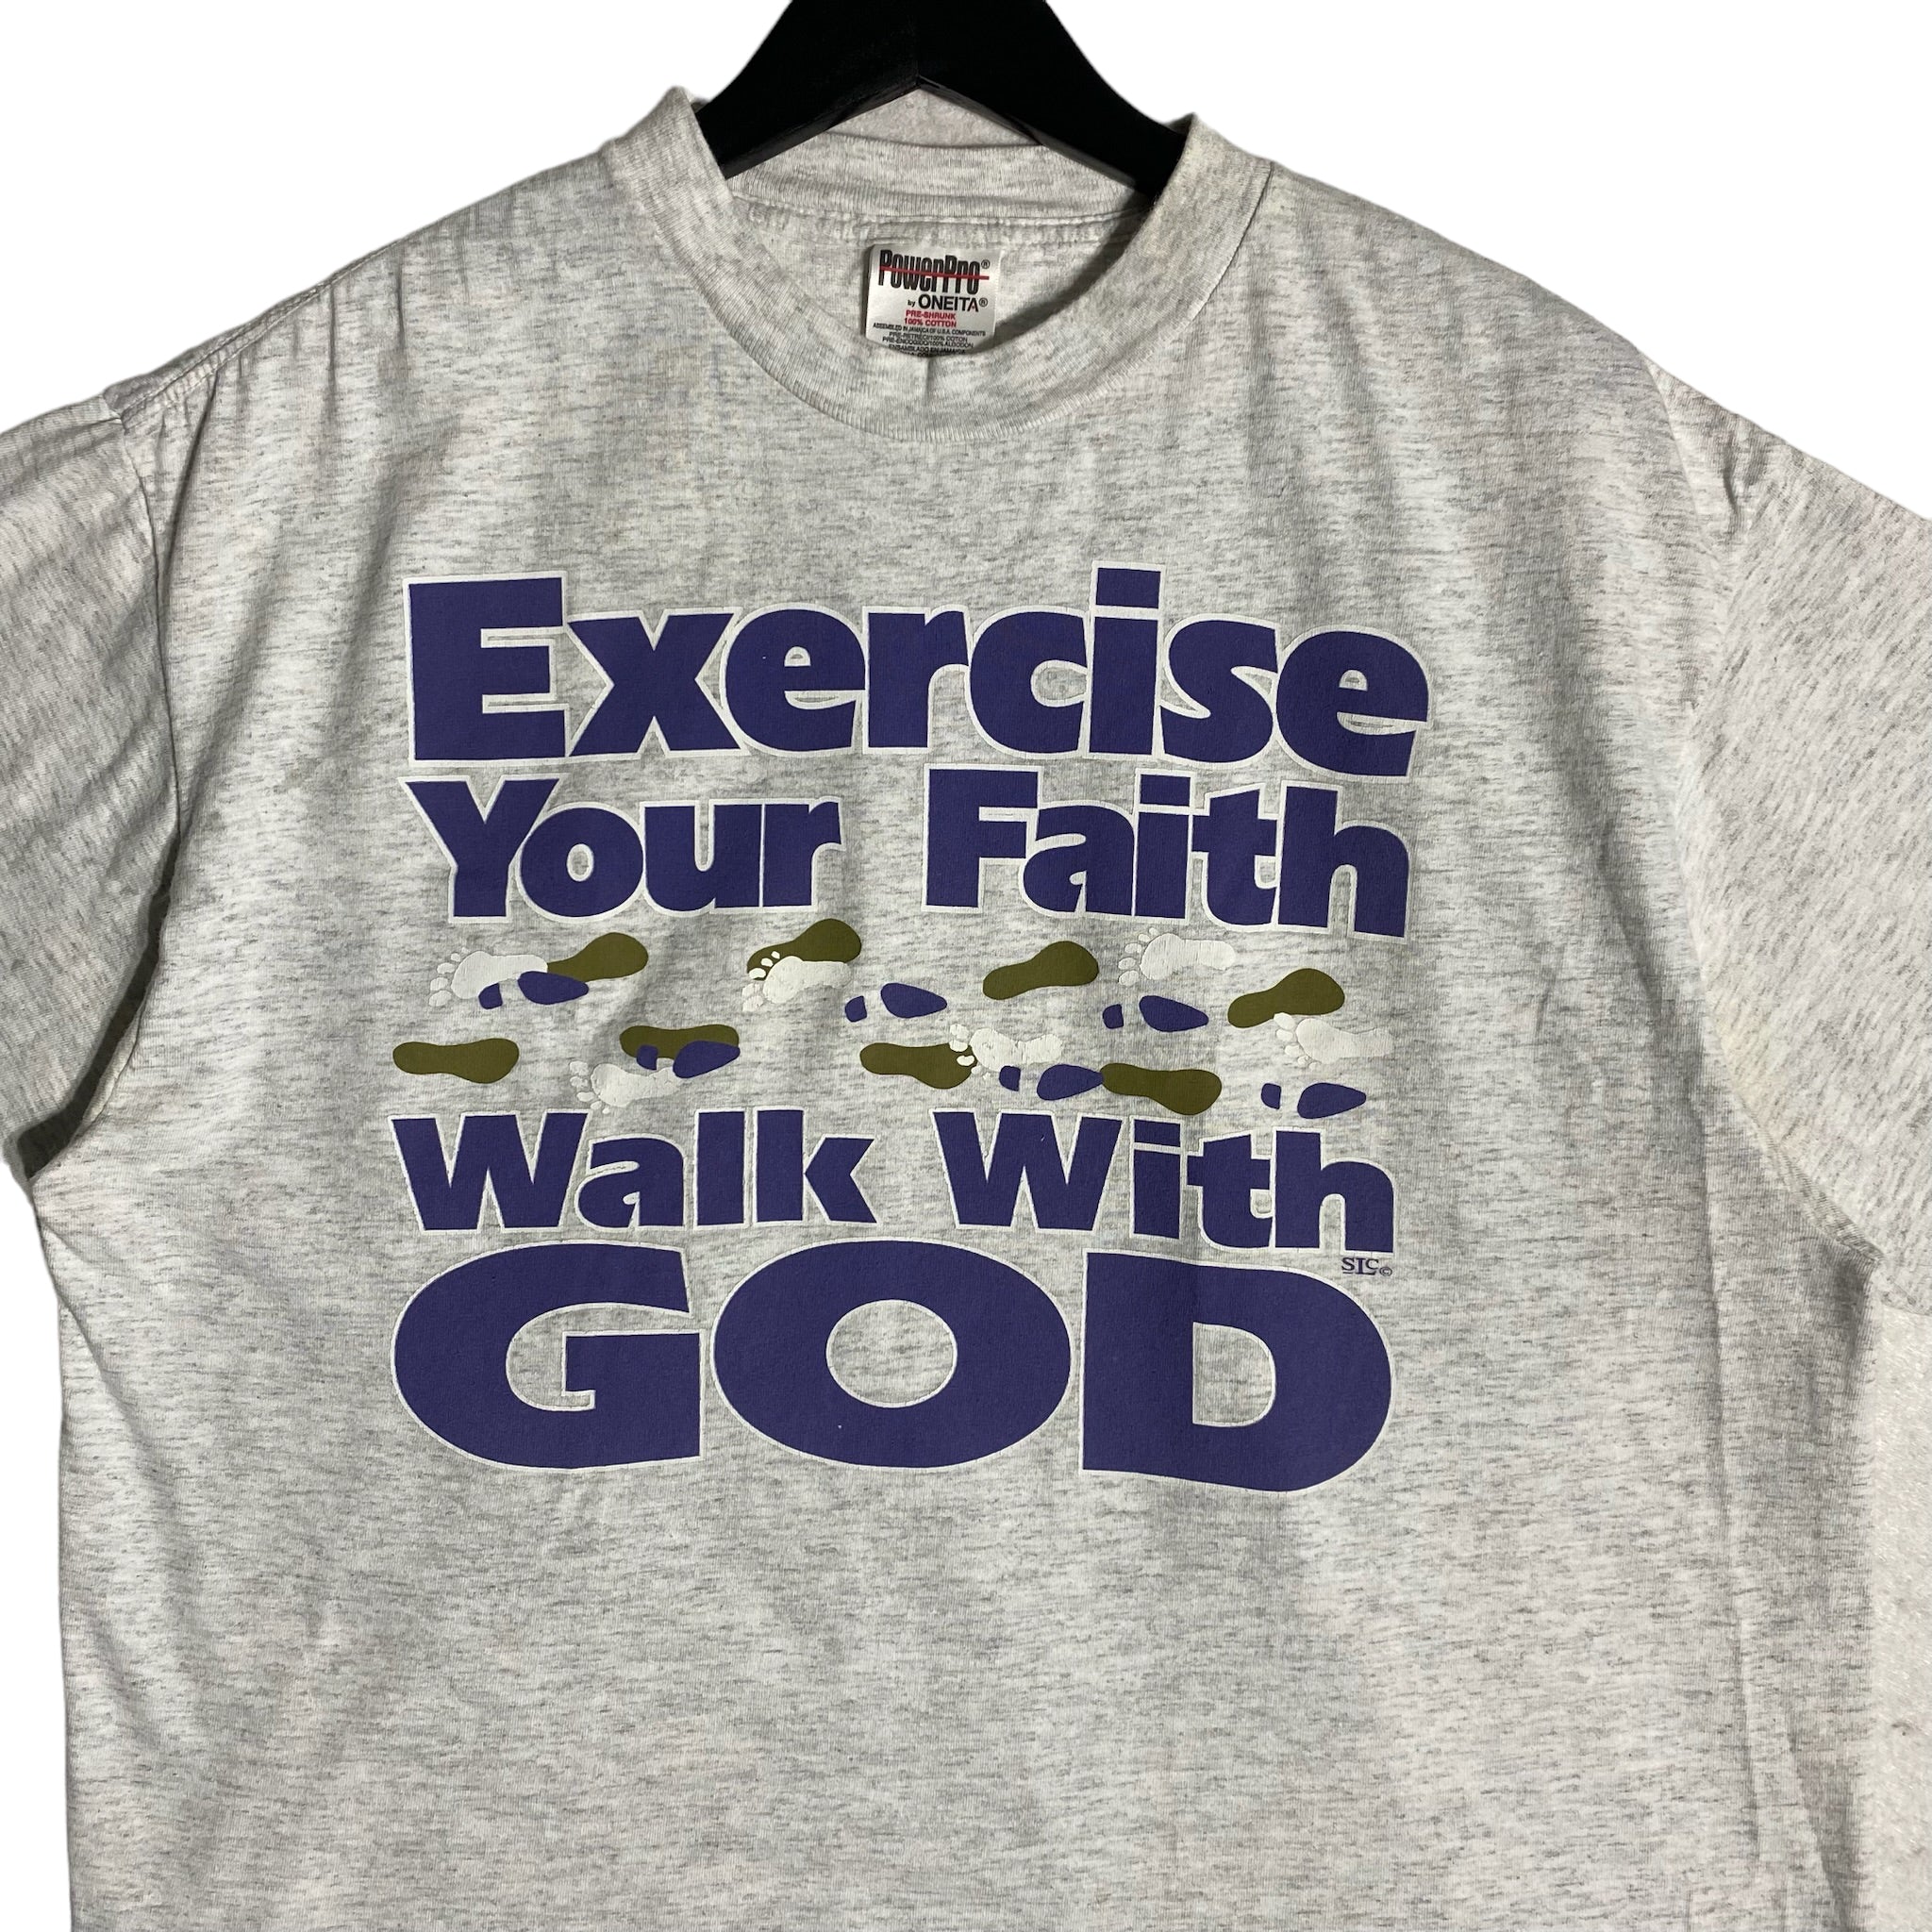 Vintage "Walk With God" Jesus Tee 90s